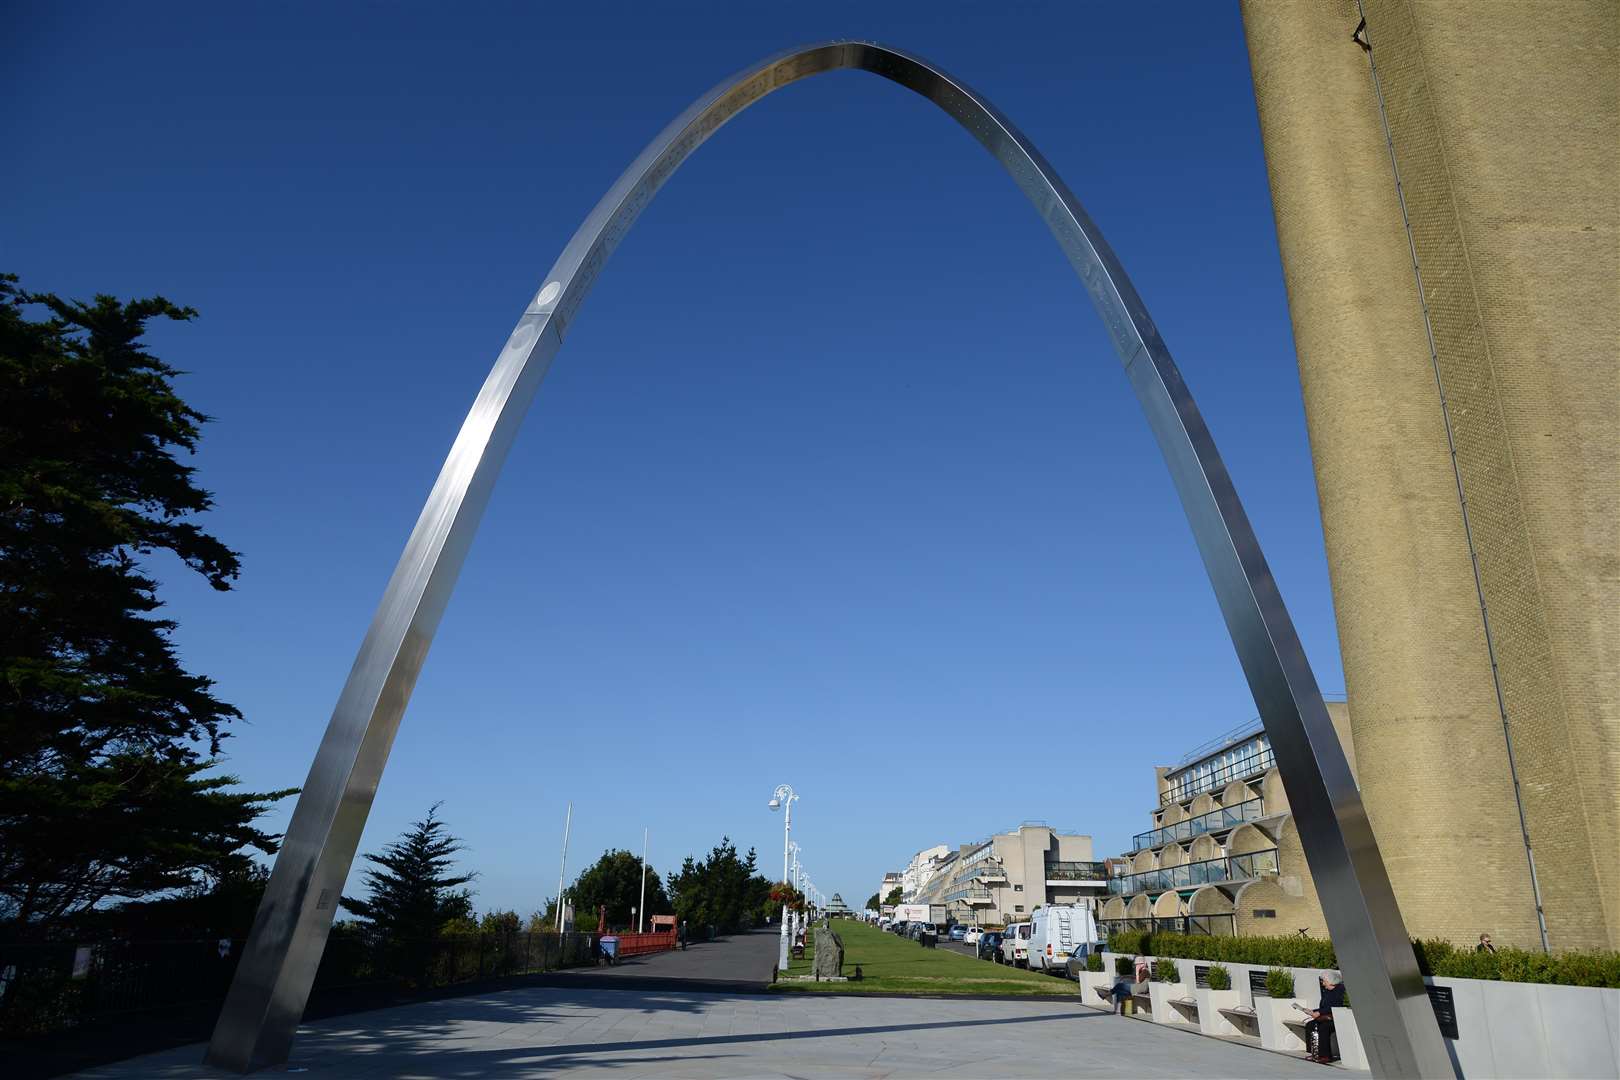 The Memorial Arch in Folkestone